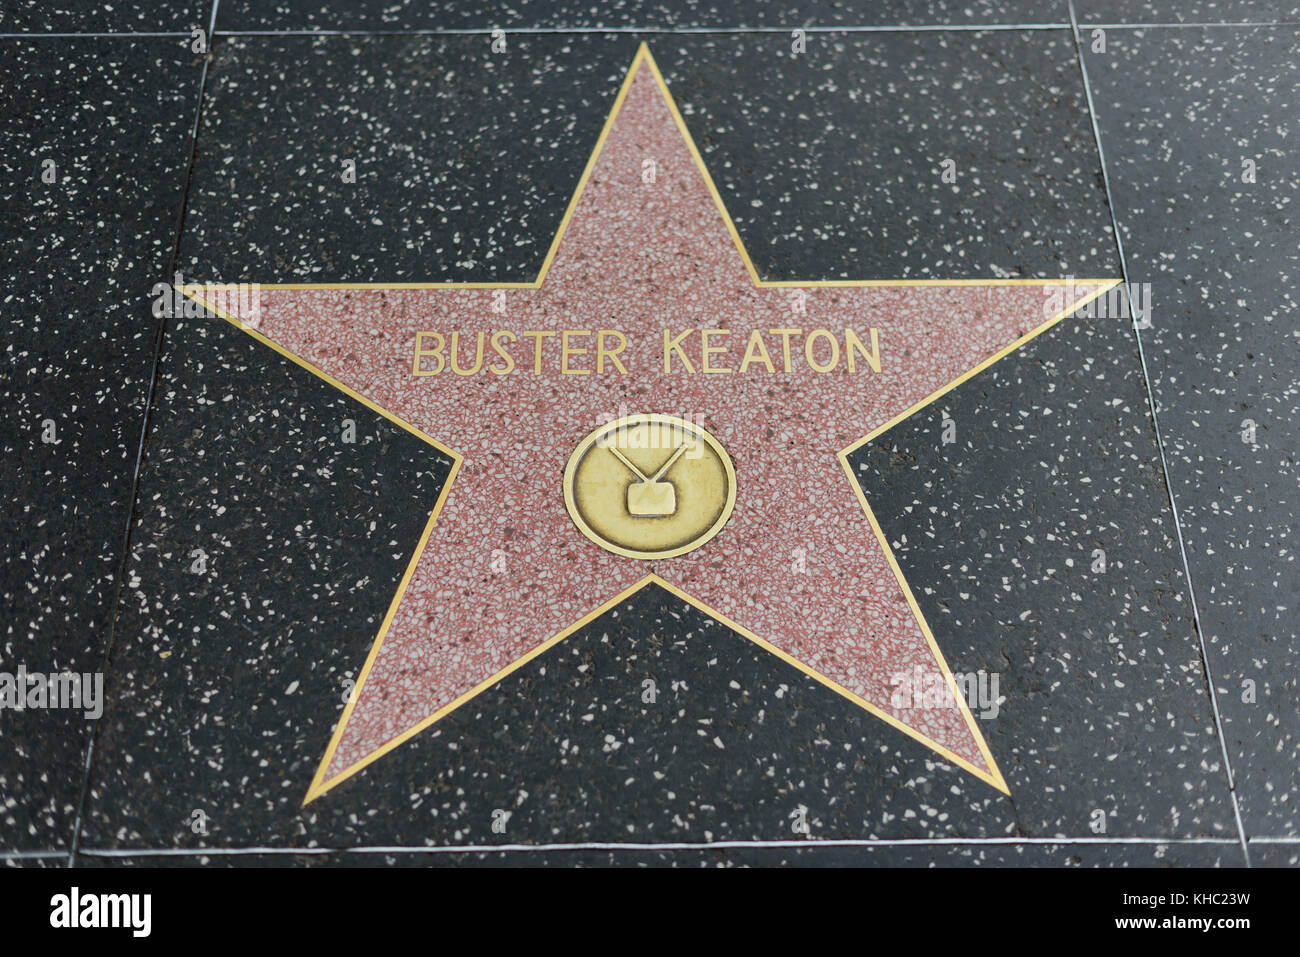 HOLLYWOOD, CA - DEZEMBER 06: Buster Keaton Star auf dem Hollywood Walk of Fame in Hollywood, Kalifornien am 6. Dezember 2016. Stockfoto